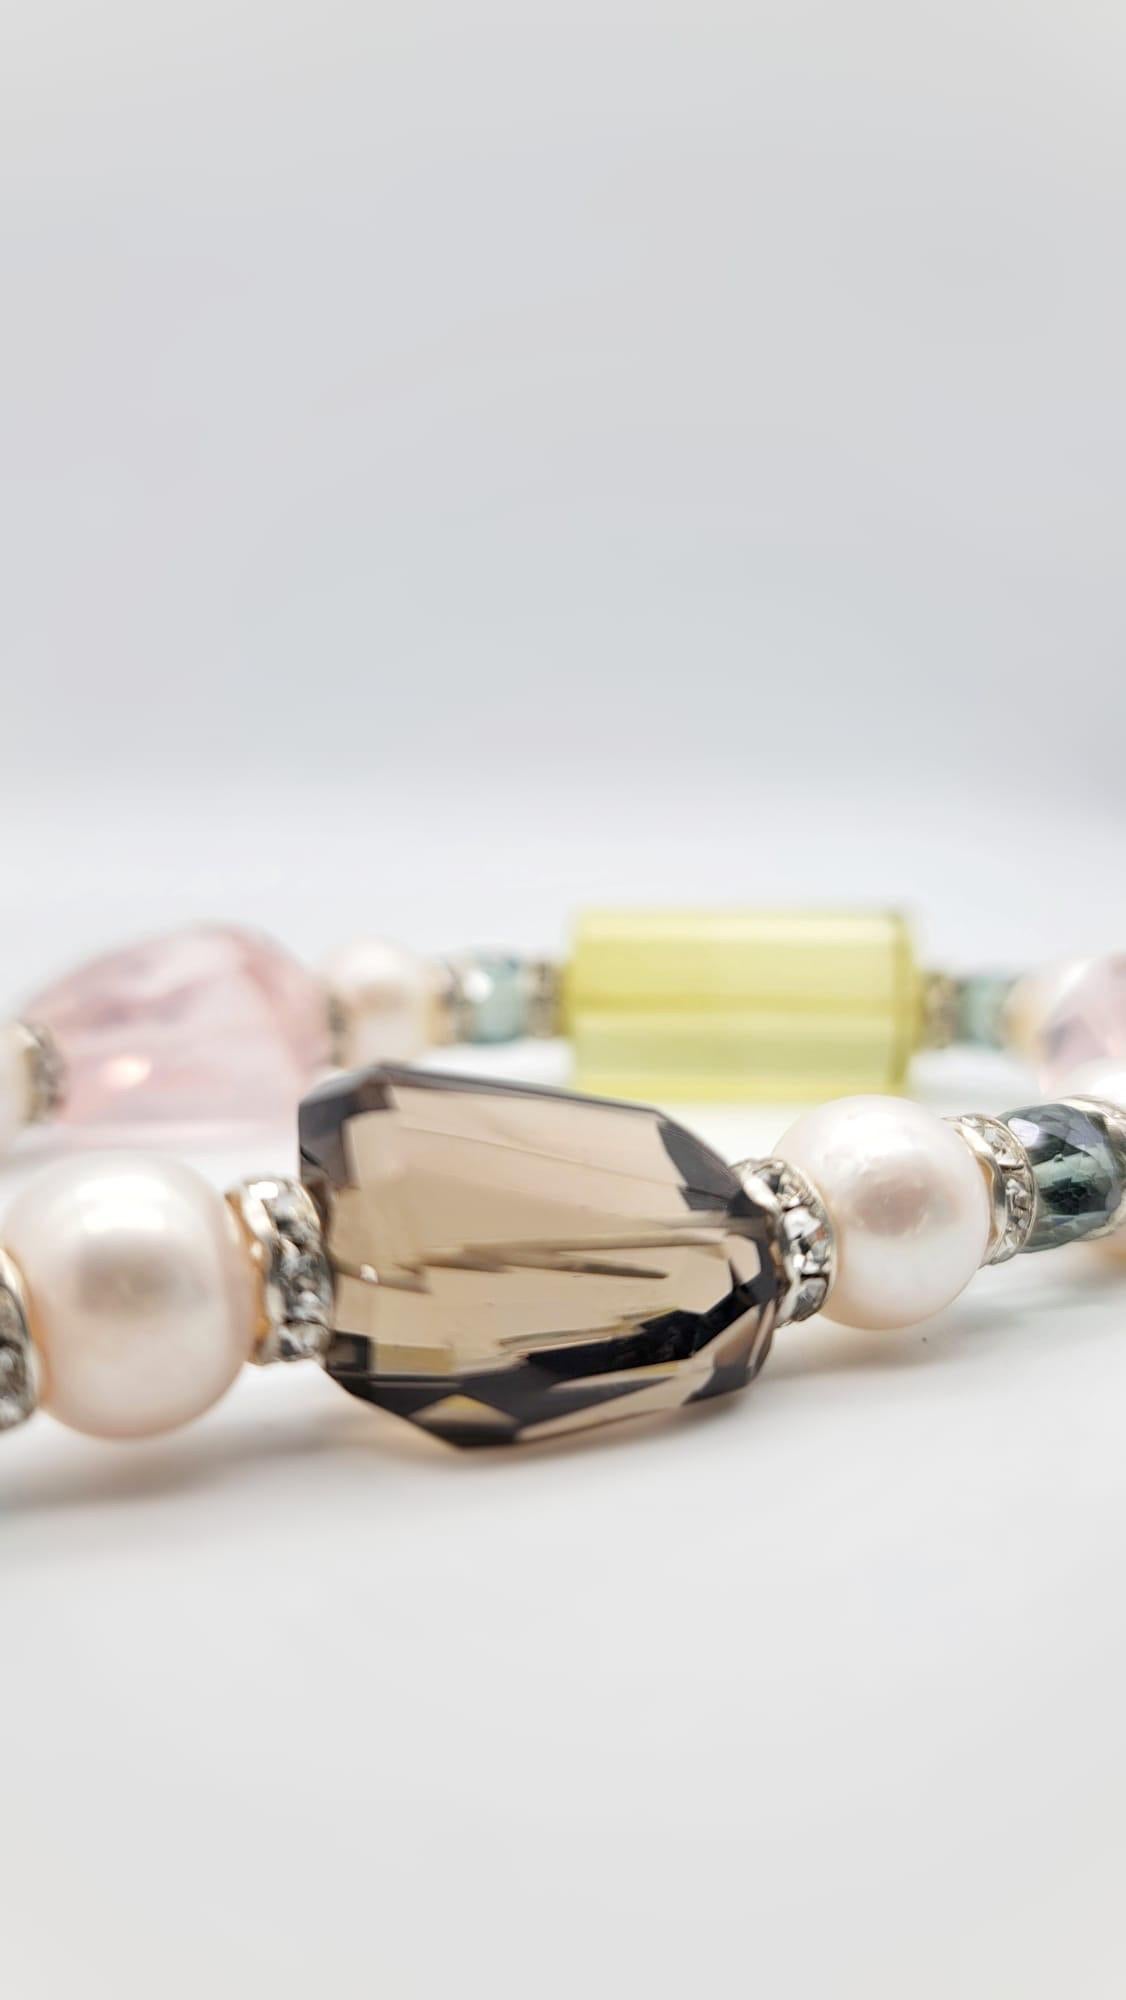 A.Jeschel Elegant crystal Quartz in a soft and flattering palette of gemstones For Sale 1